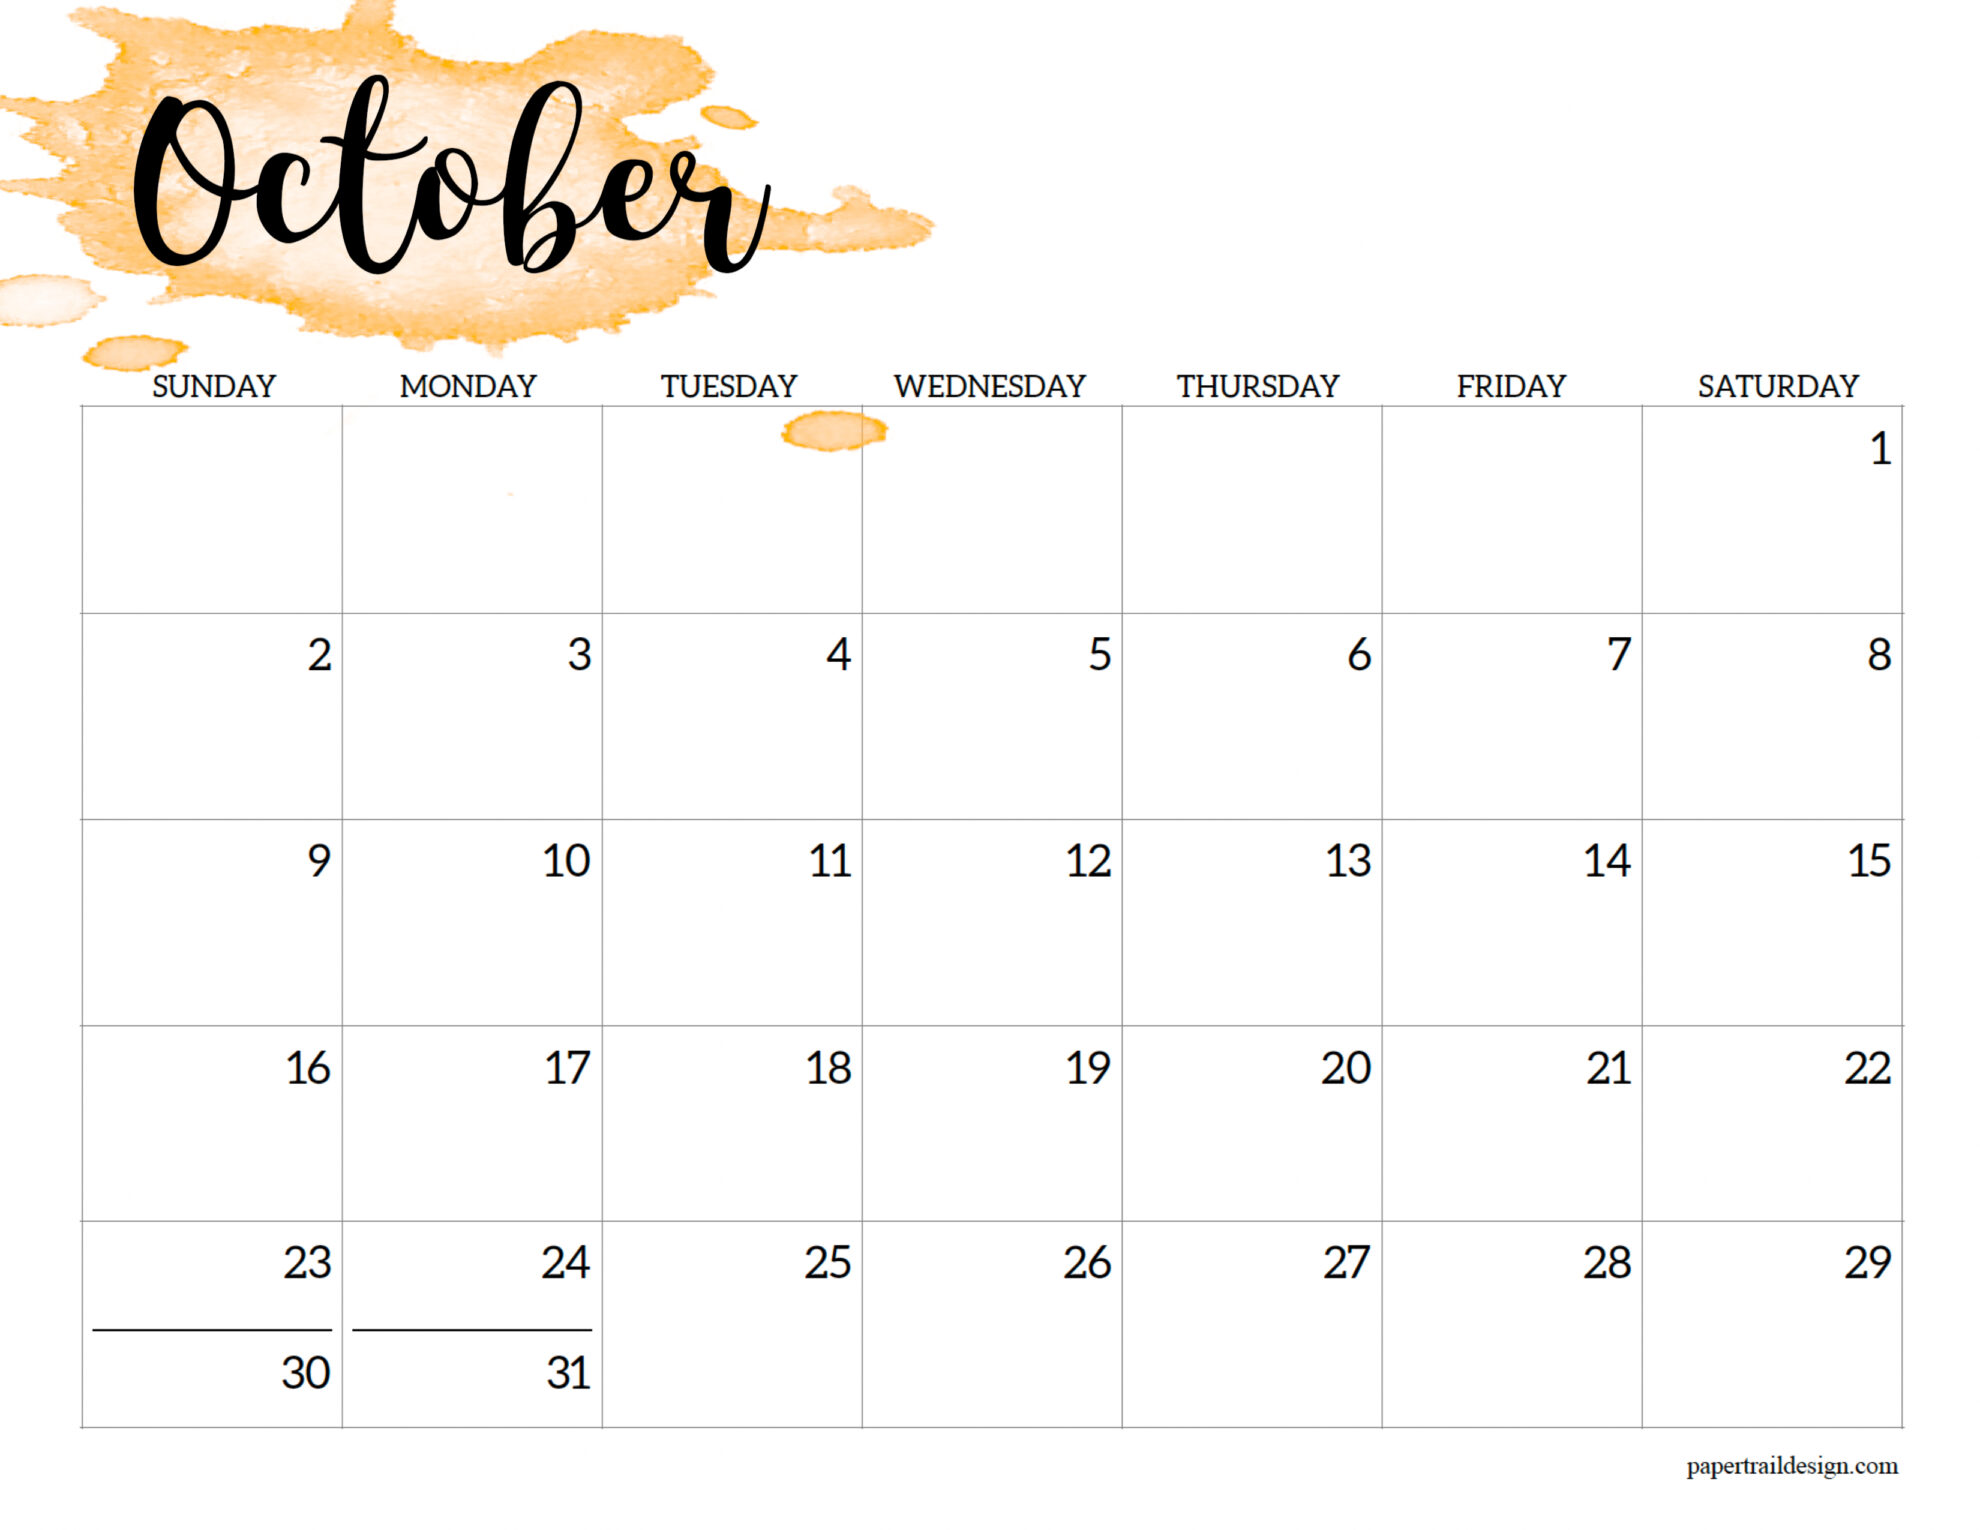 Oct Calendar 2022 Printable 2022 Calendar Printable - Watercolor - Paper Trail Design